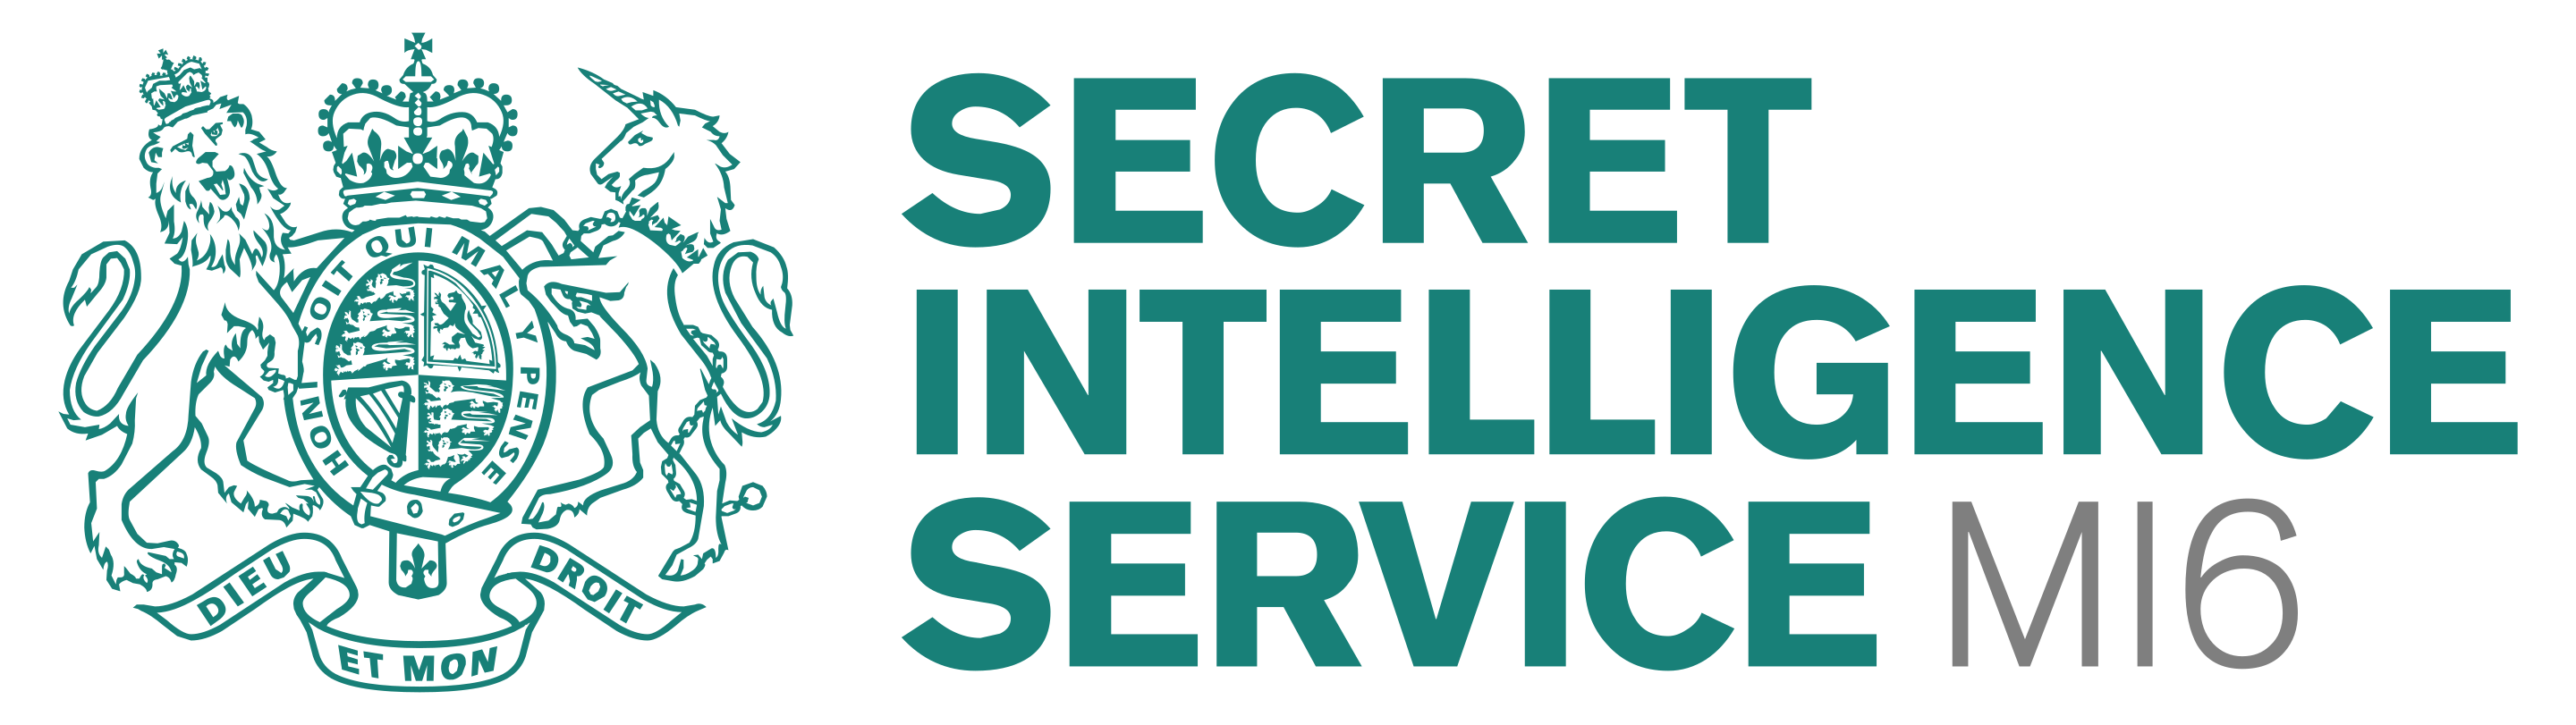 UK MI6 - Military Intelligence - Secret Intelligence Service MI6 - Секретная разведывательная служба Великобритании  МИ-6